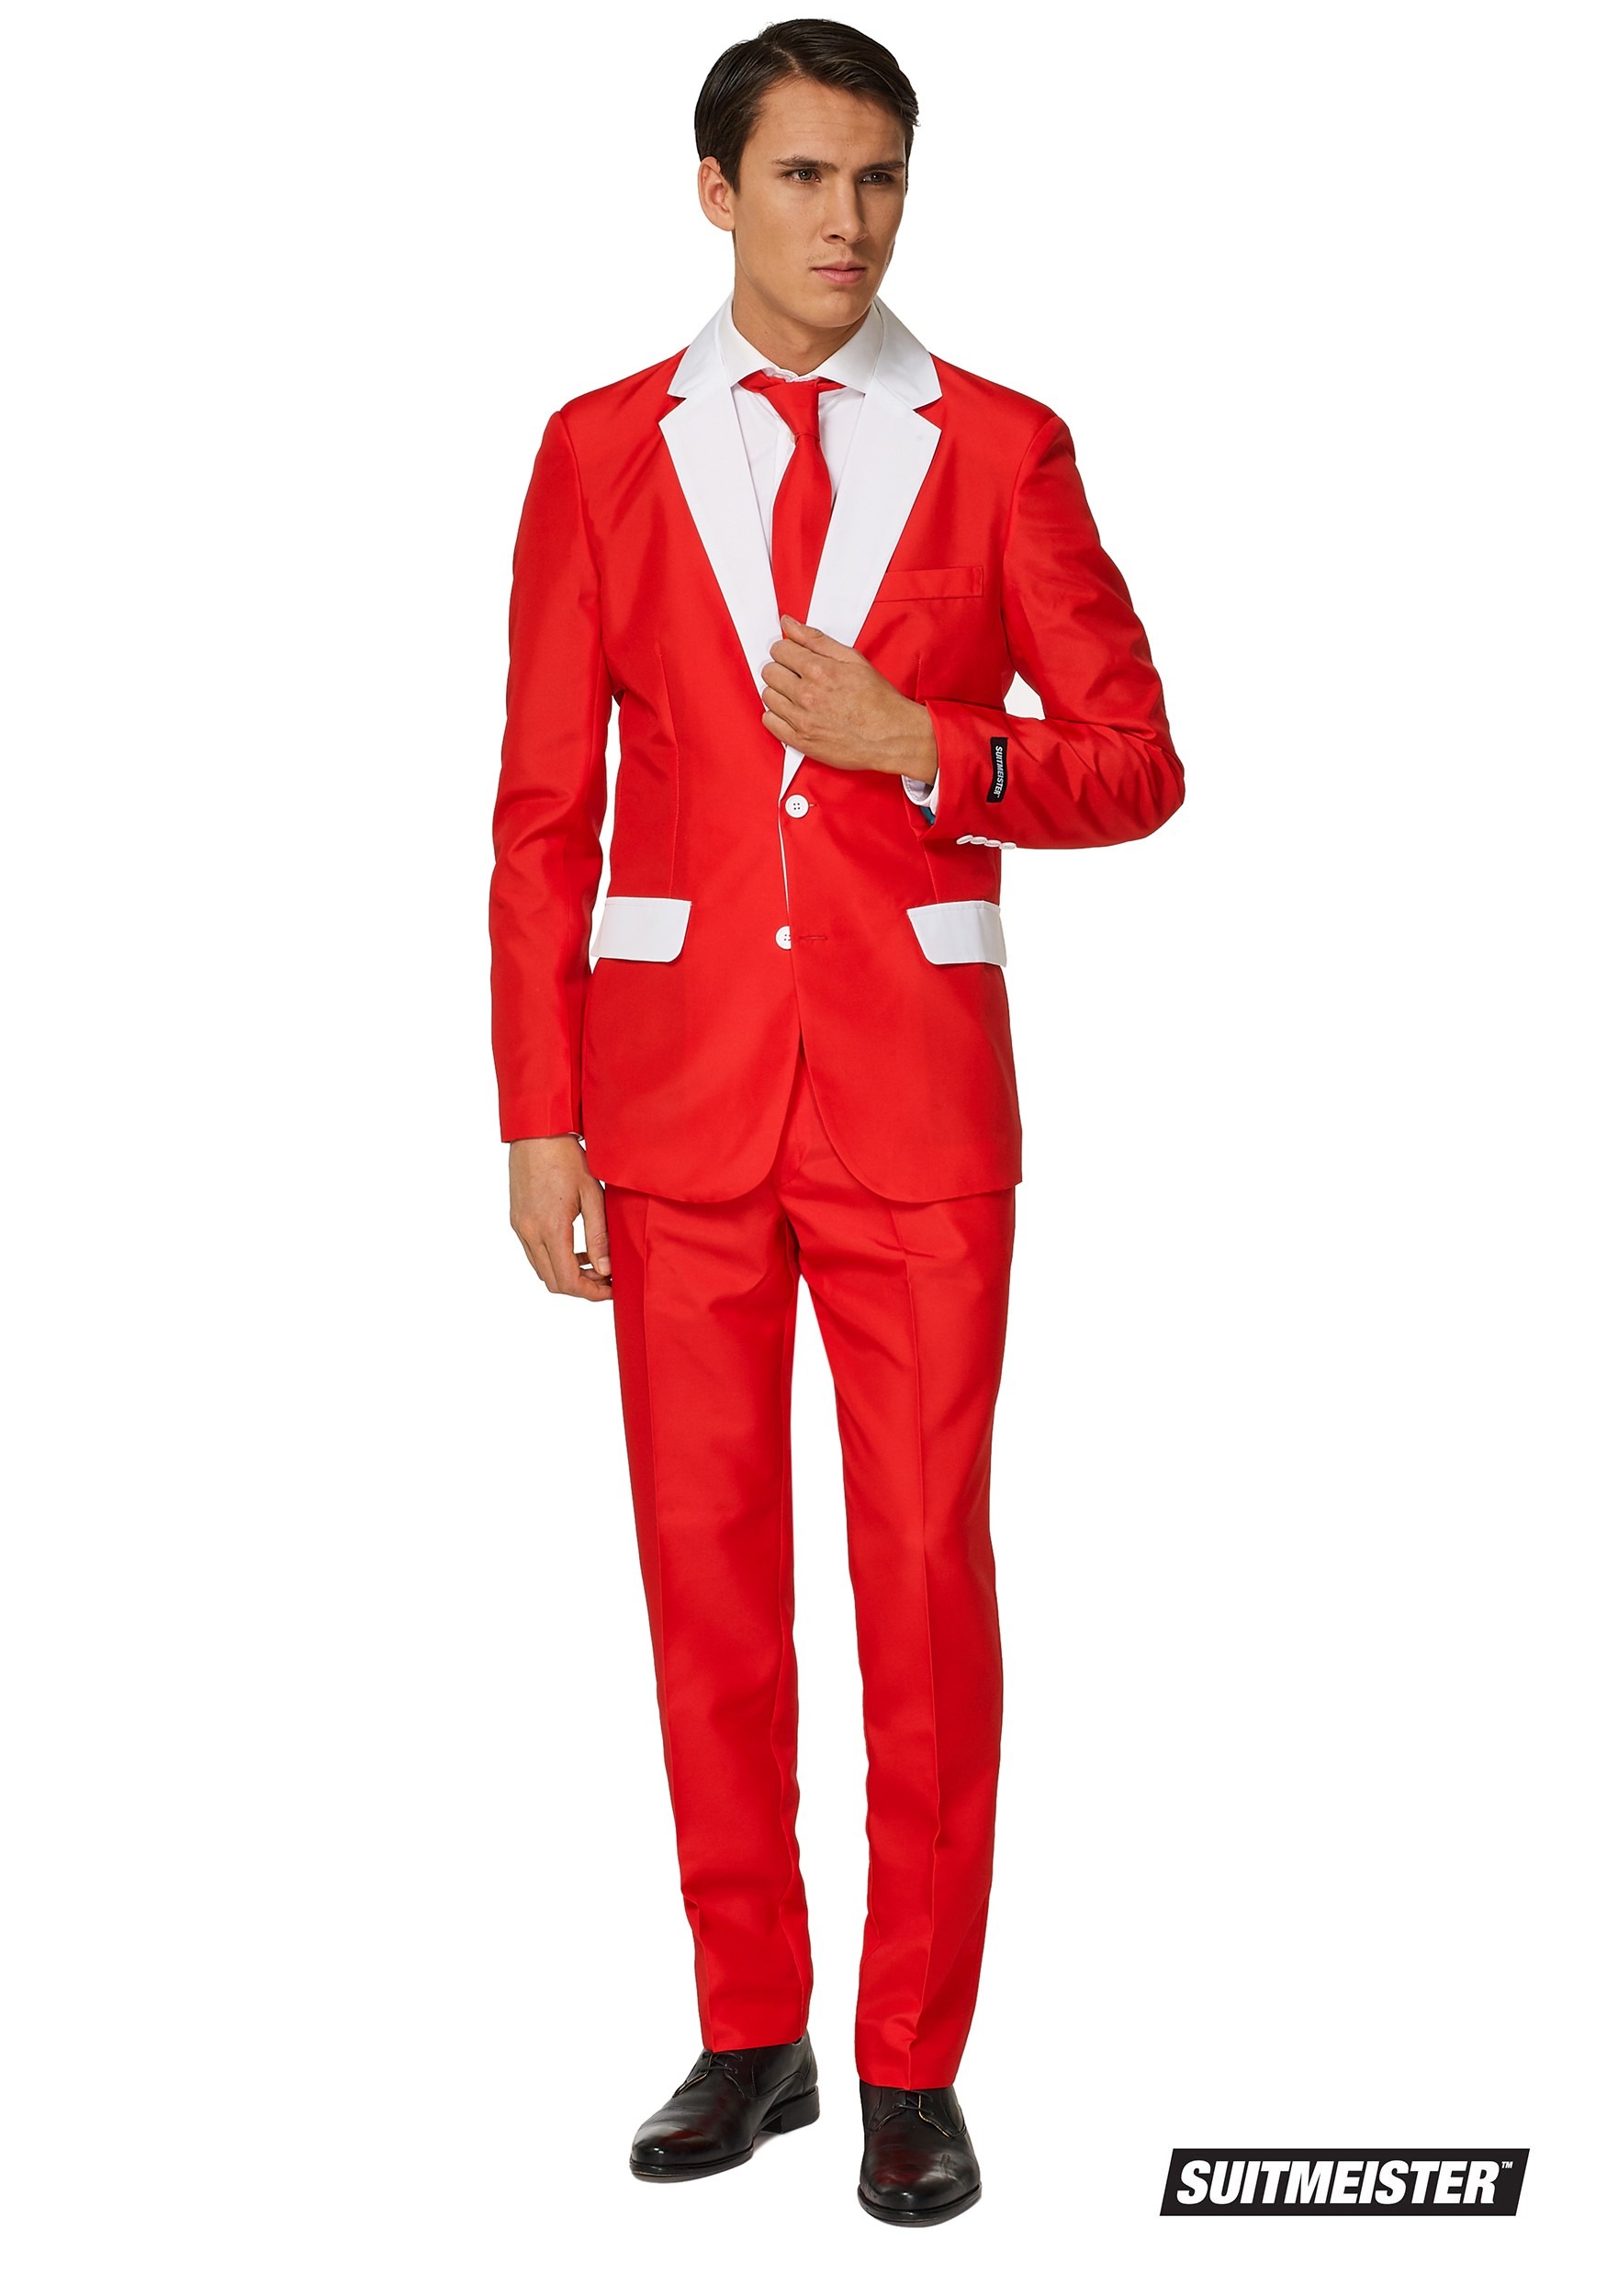 Men’s Santa Outfit Suitmeister